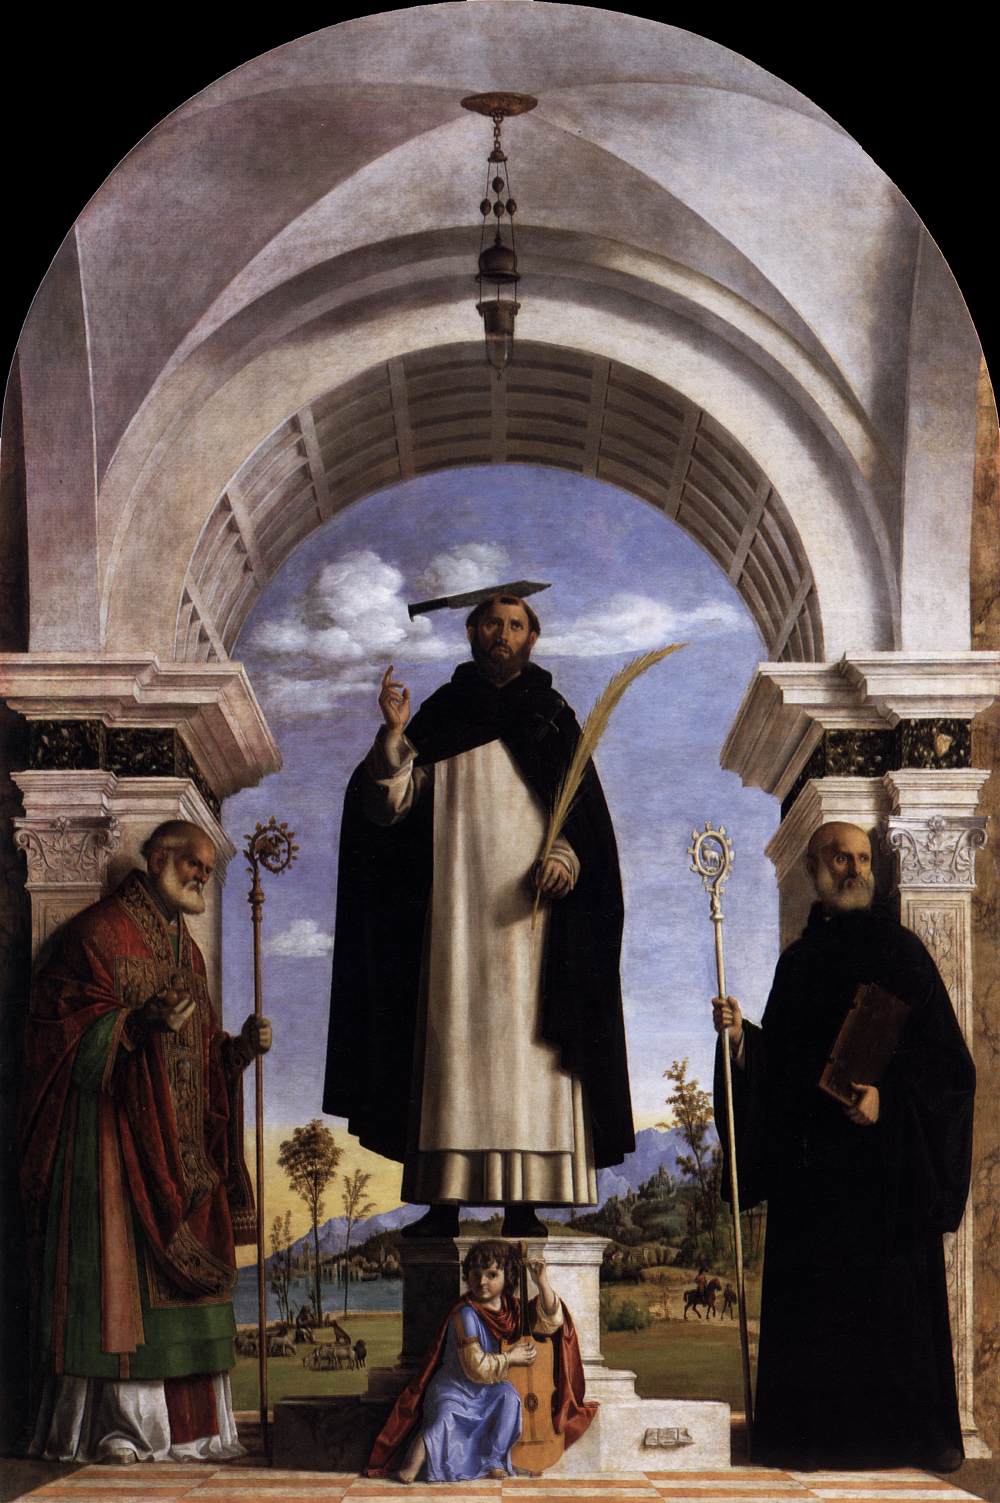 Saint Peter the Martyr with Saint Nicholas of Bari, Saint Benedict and an Angel Musician